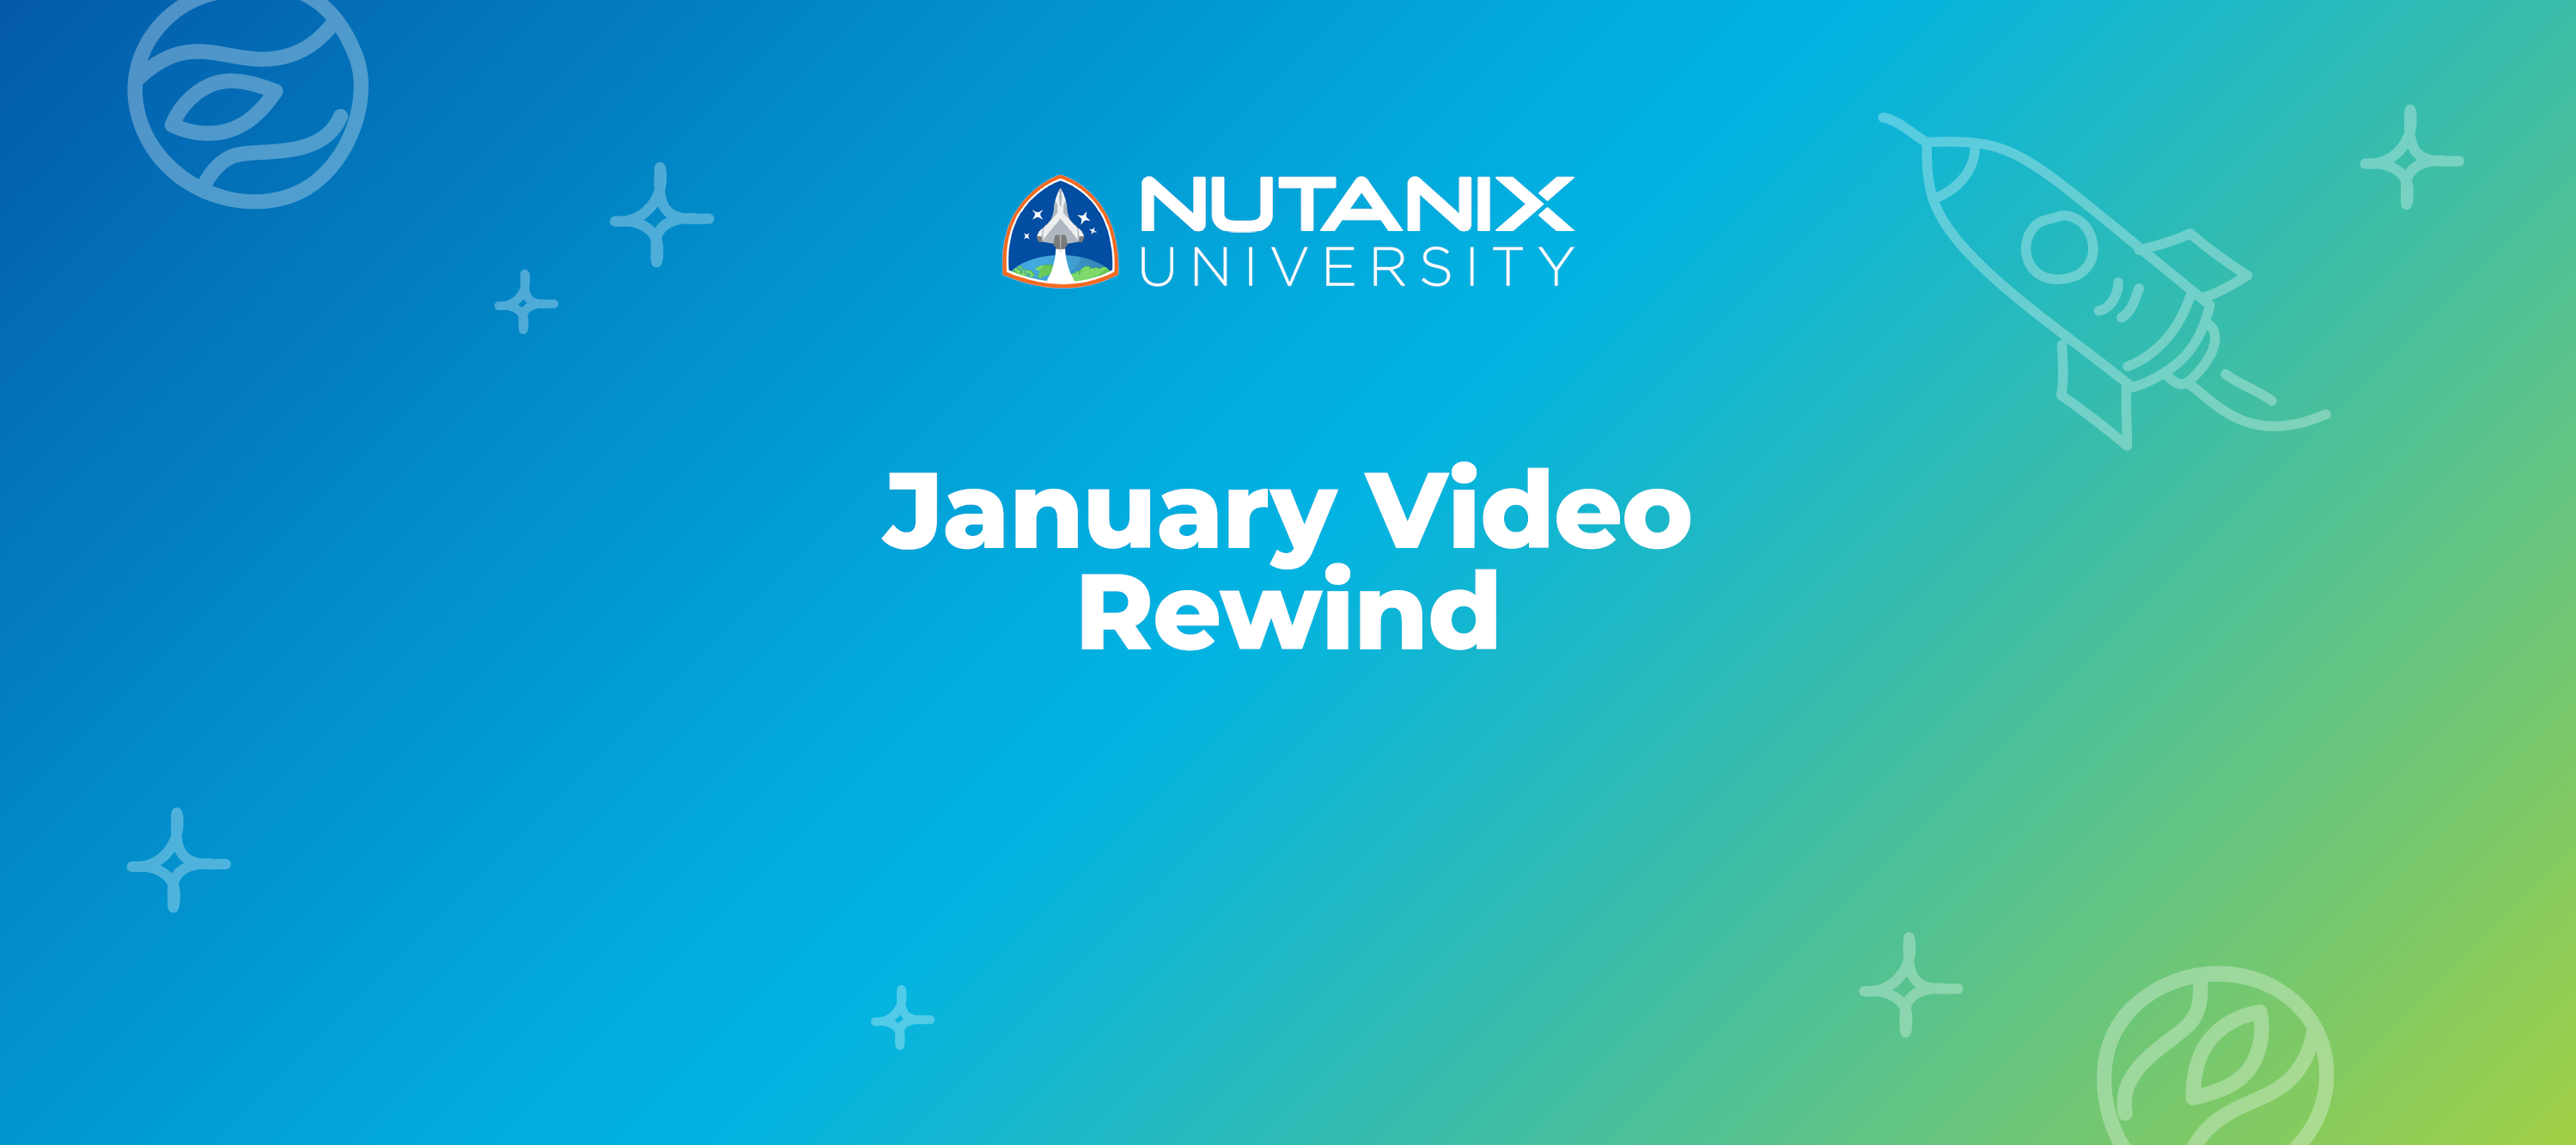 Nutanix University January Video Rewind